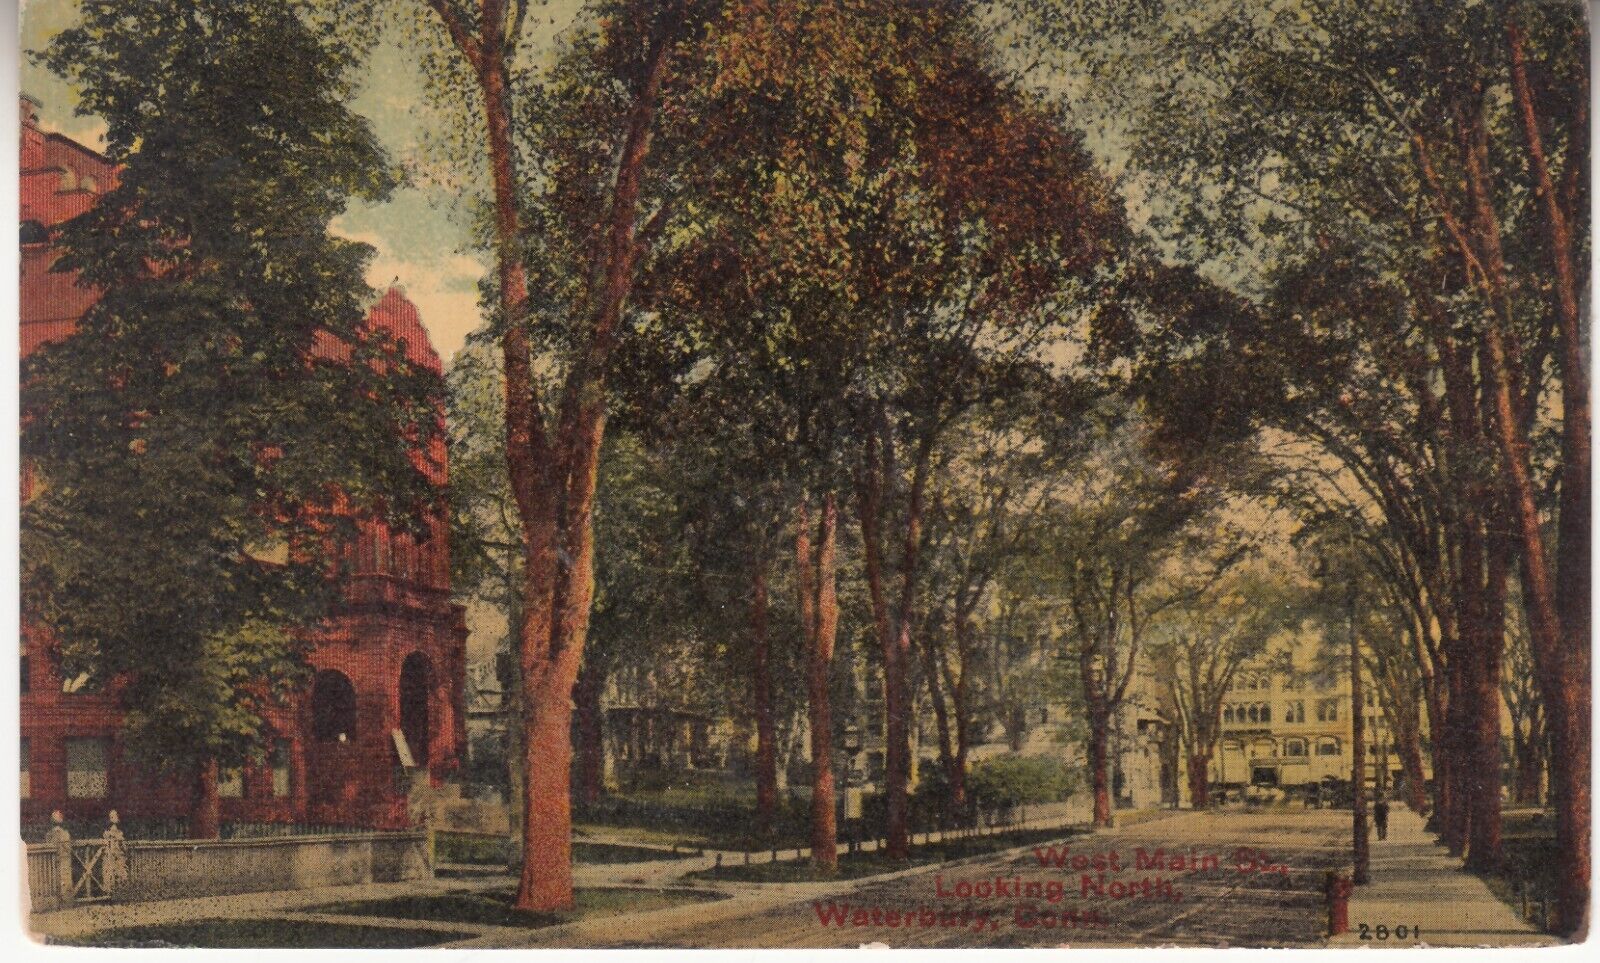 West Main Street Looking North. Waterbury, Connecticut CT 1911